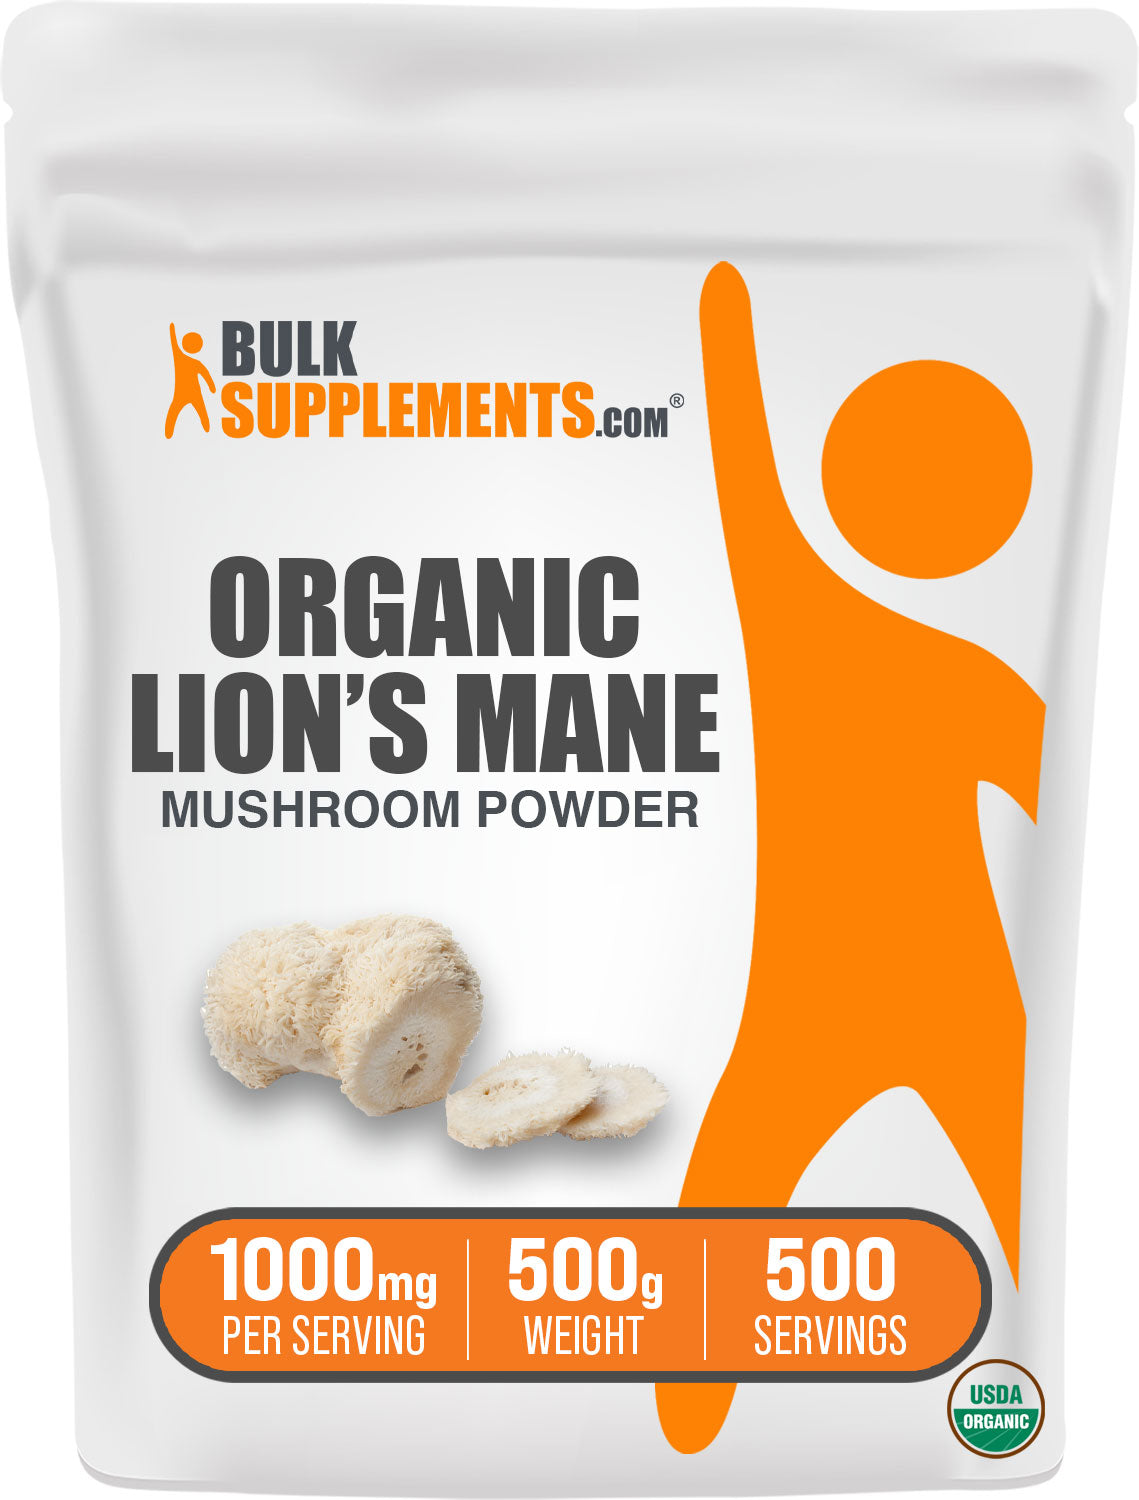 BulkSupplements Organic Lion's Mane Mushroom Powder 500g Bag